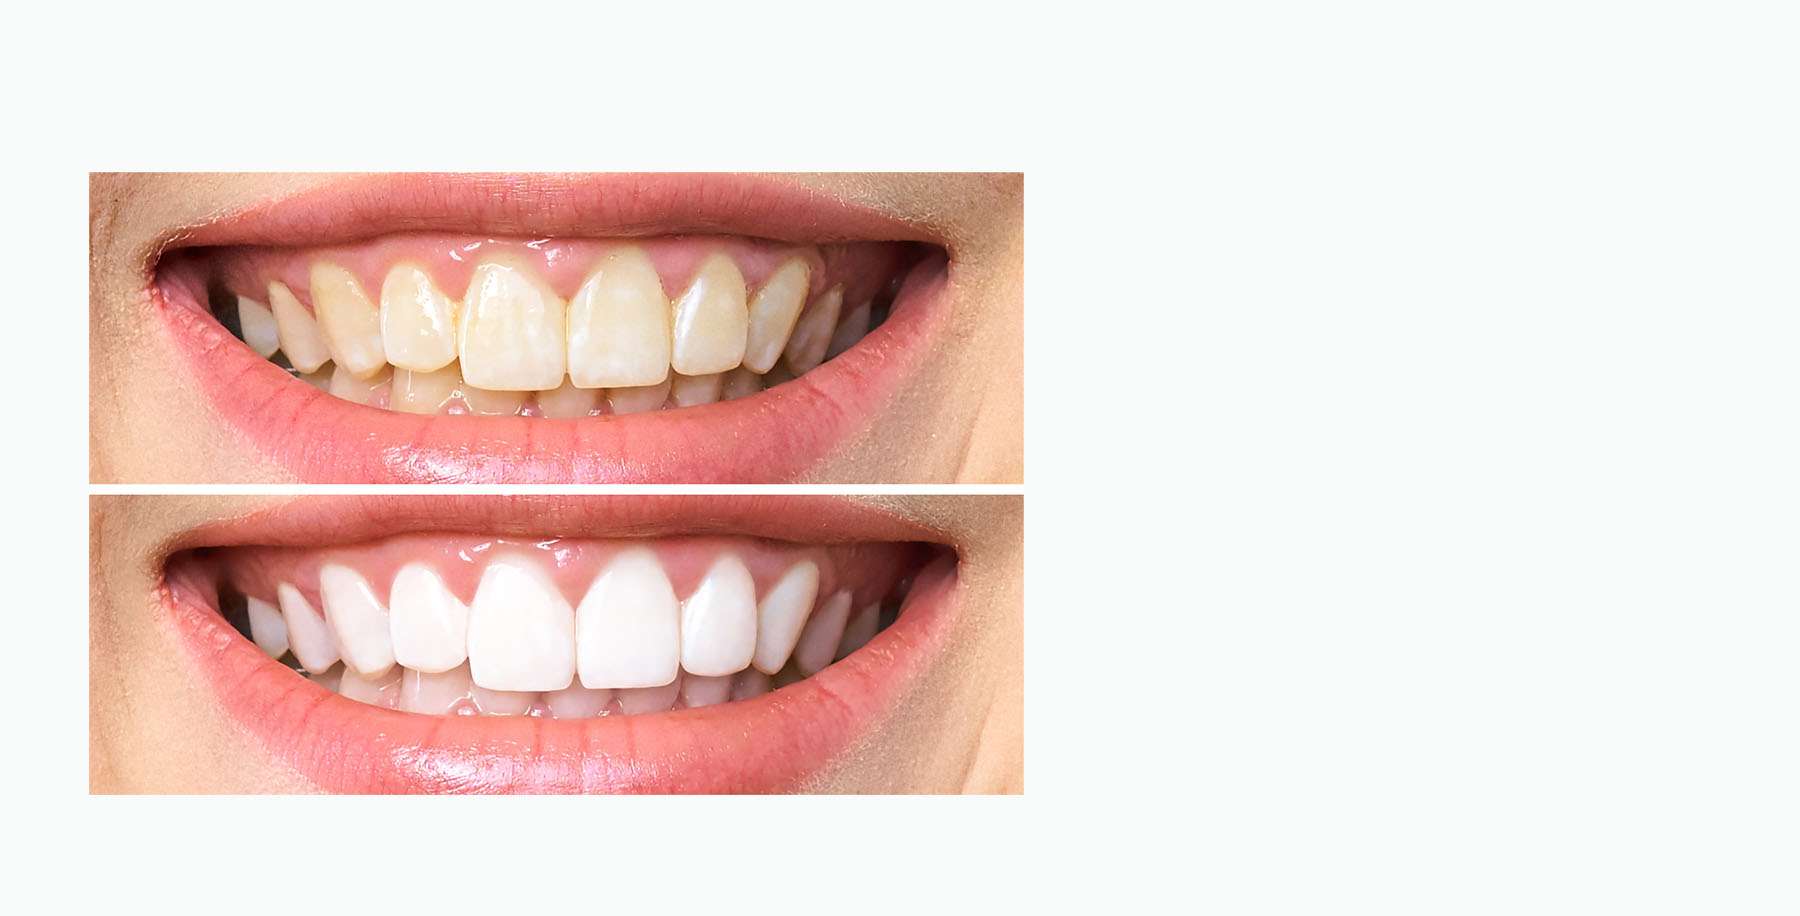 Teeth Whitening